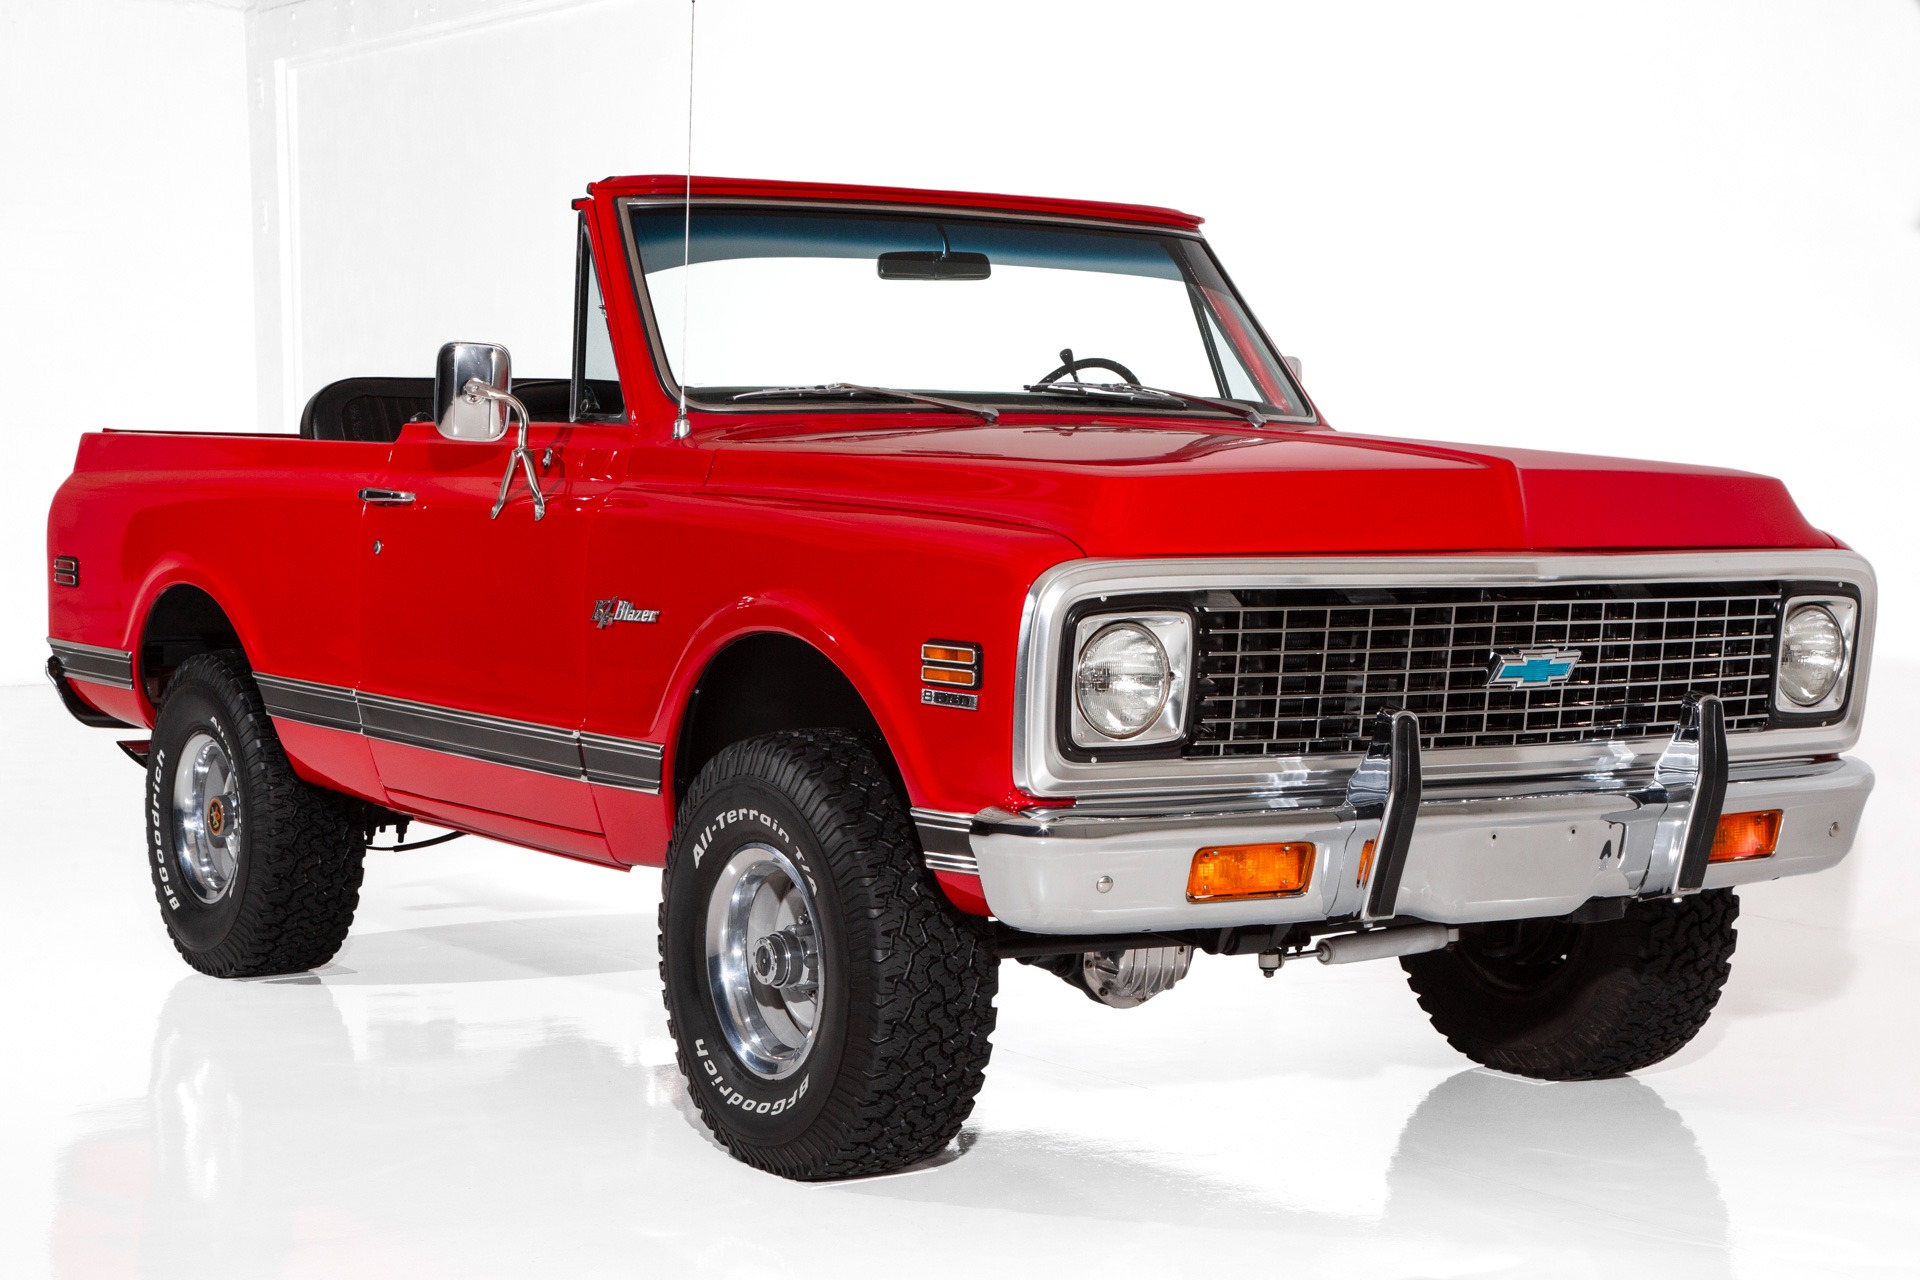 For Sale Used 1972 Chevrolet Blazer K5 4x4  350 Auto PS PB Hardtop | American Dream Machines Des Moines IA 50309